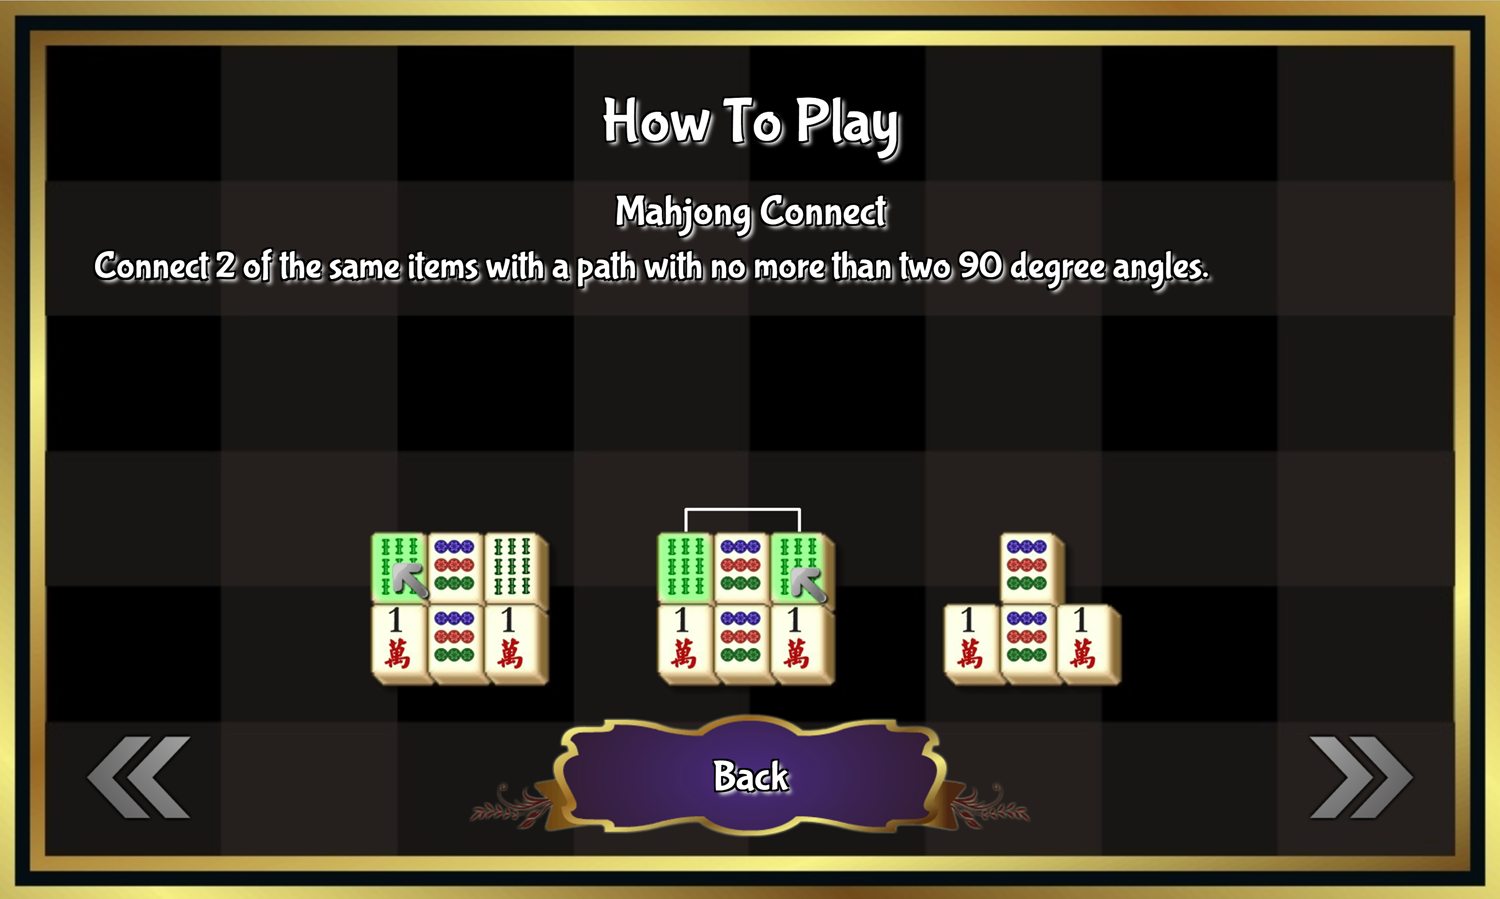 Mahjong Mix Game How To Play Mahjong Connect Screenshot.